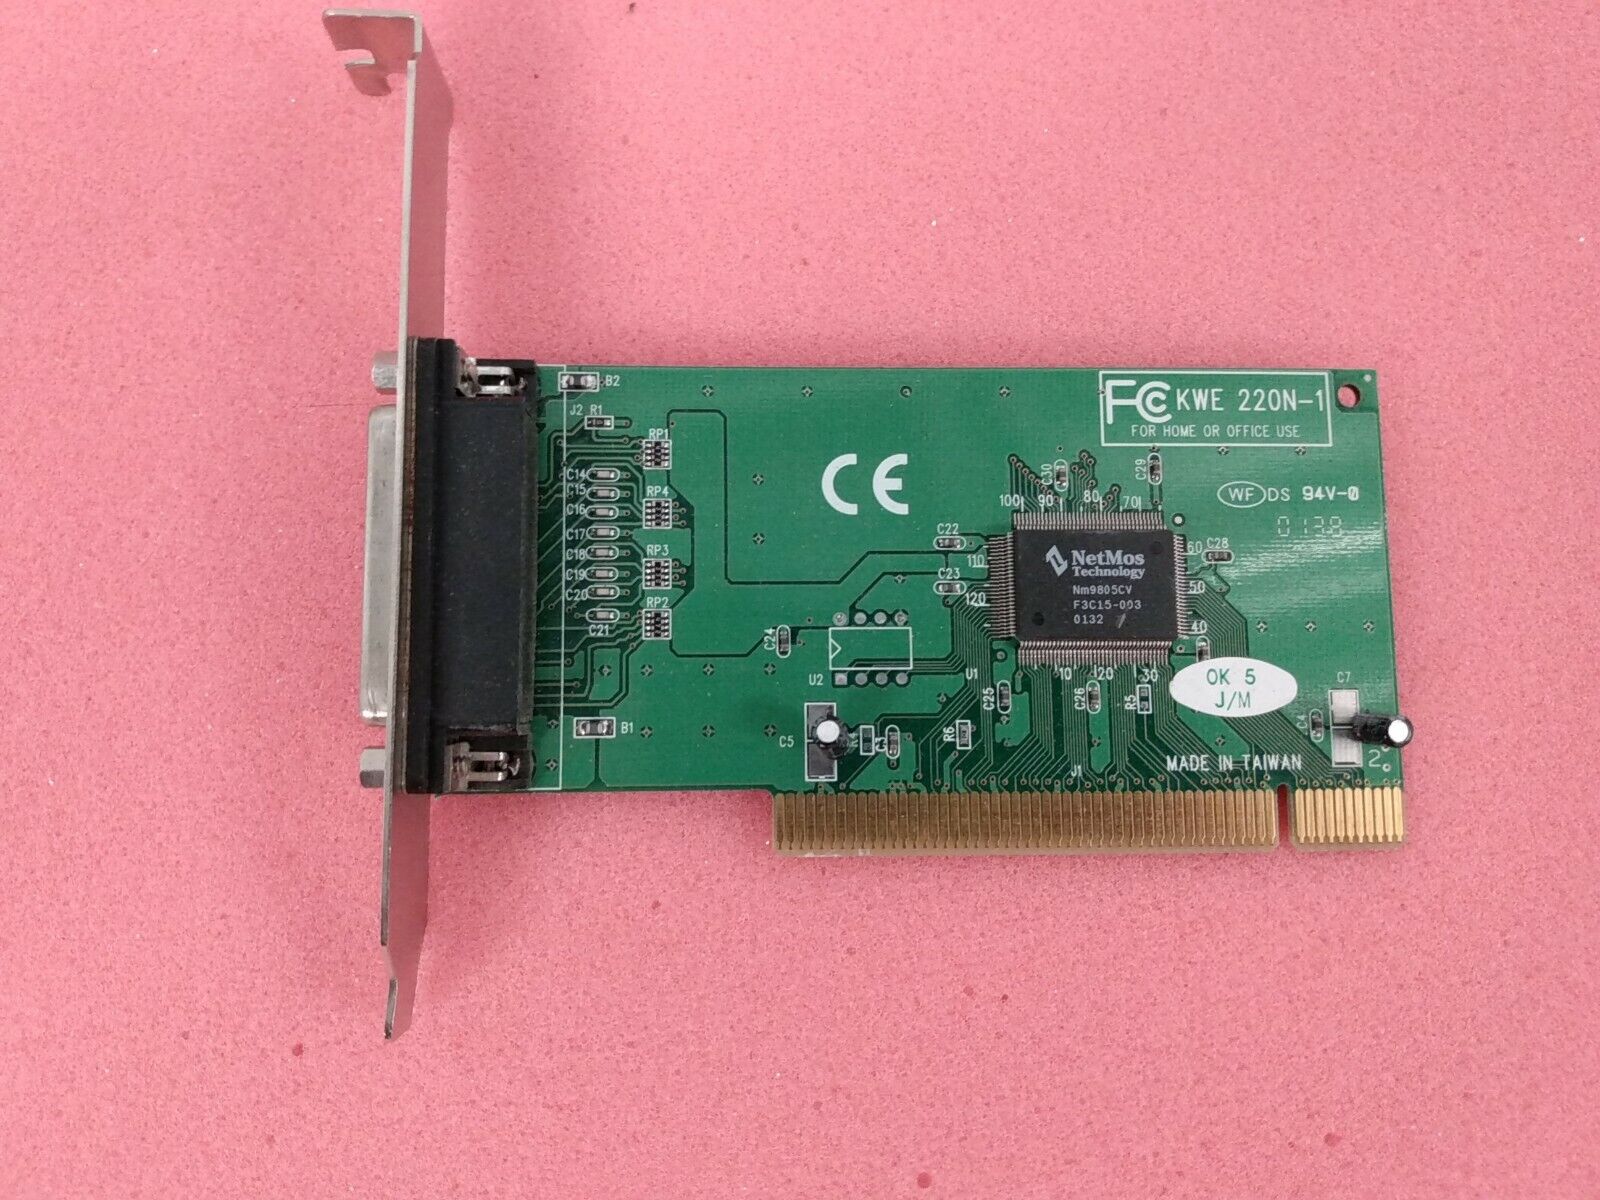 Kwe 220n-1 Netmos 9805CV PCI Parallel Port card Printer card